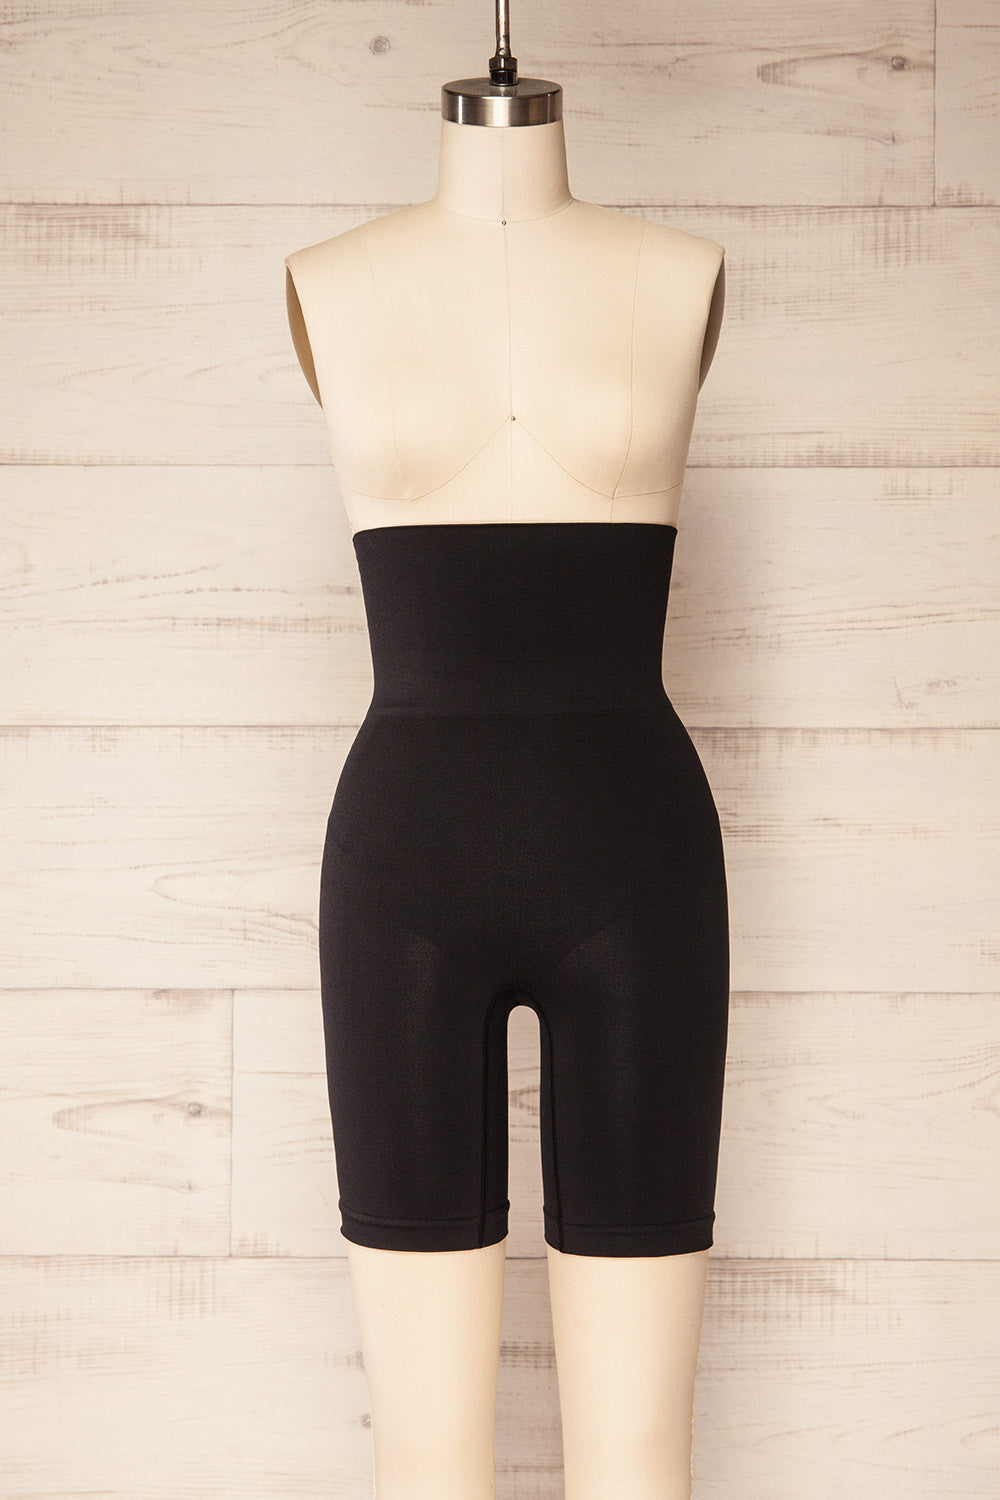 Body Shapewear - Black Shorts for Petite Body